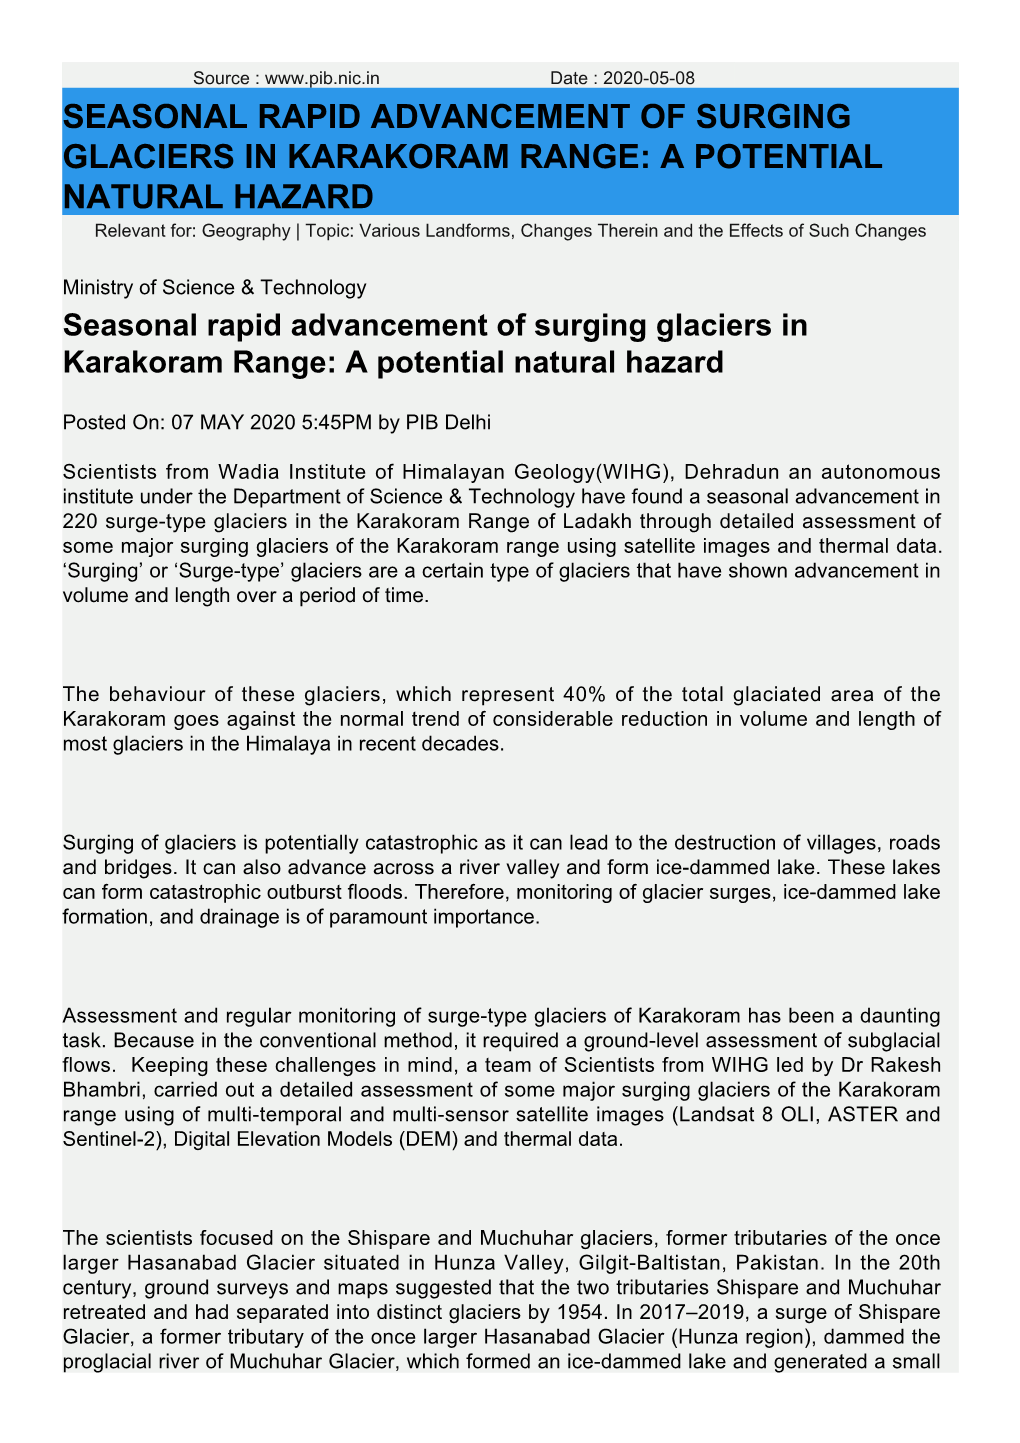 Seasonal Rapid Advancement of Surging Glaciers in Karakoram Range